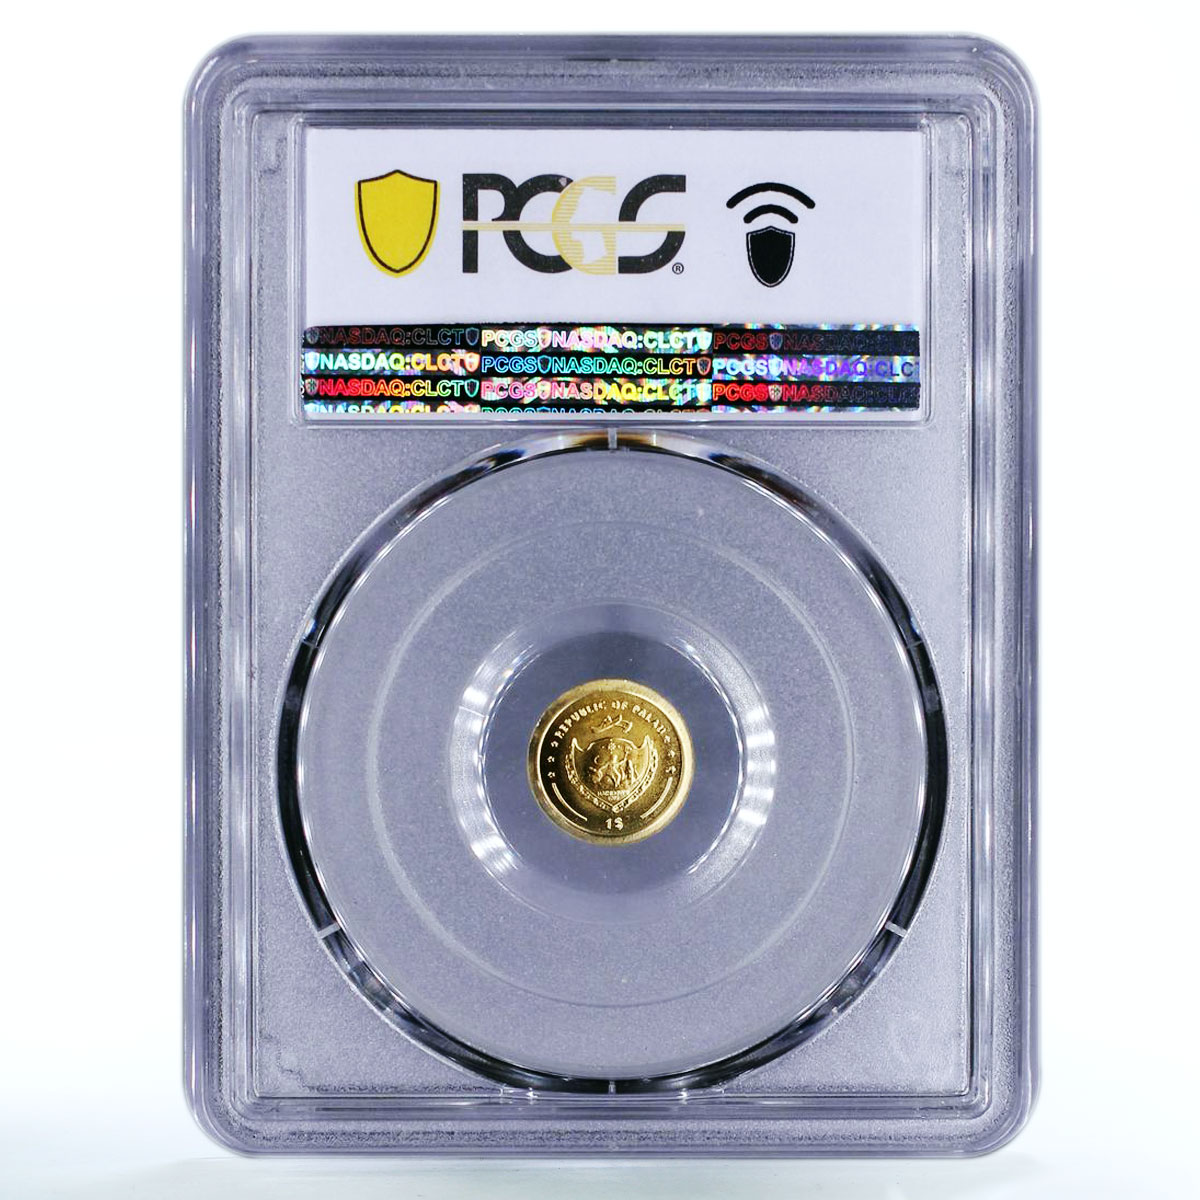 Palau 1 dollar Roman Empire Series Valentinian MS69 PCGS gold coin 2012